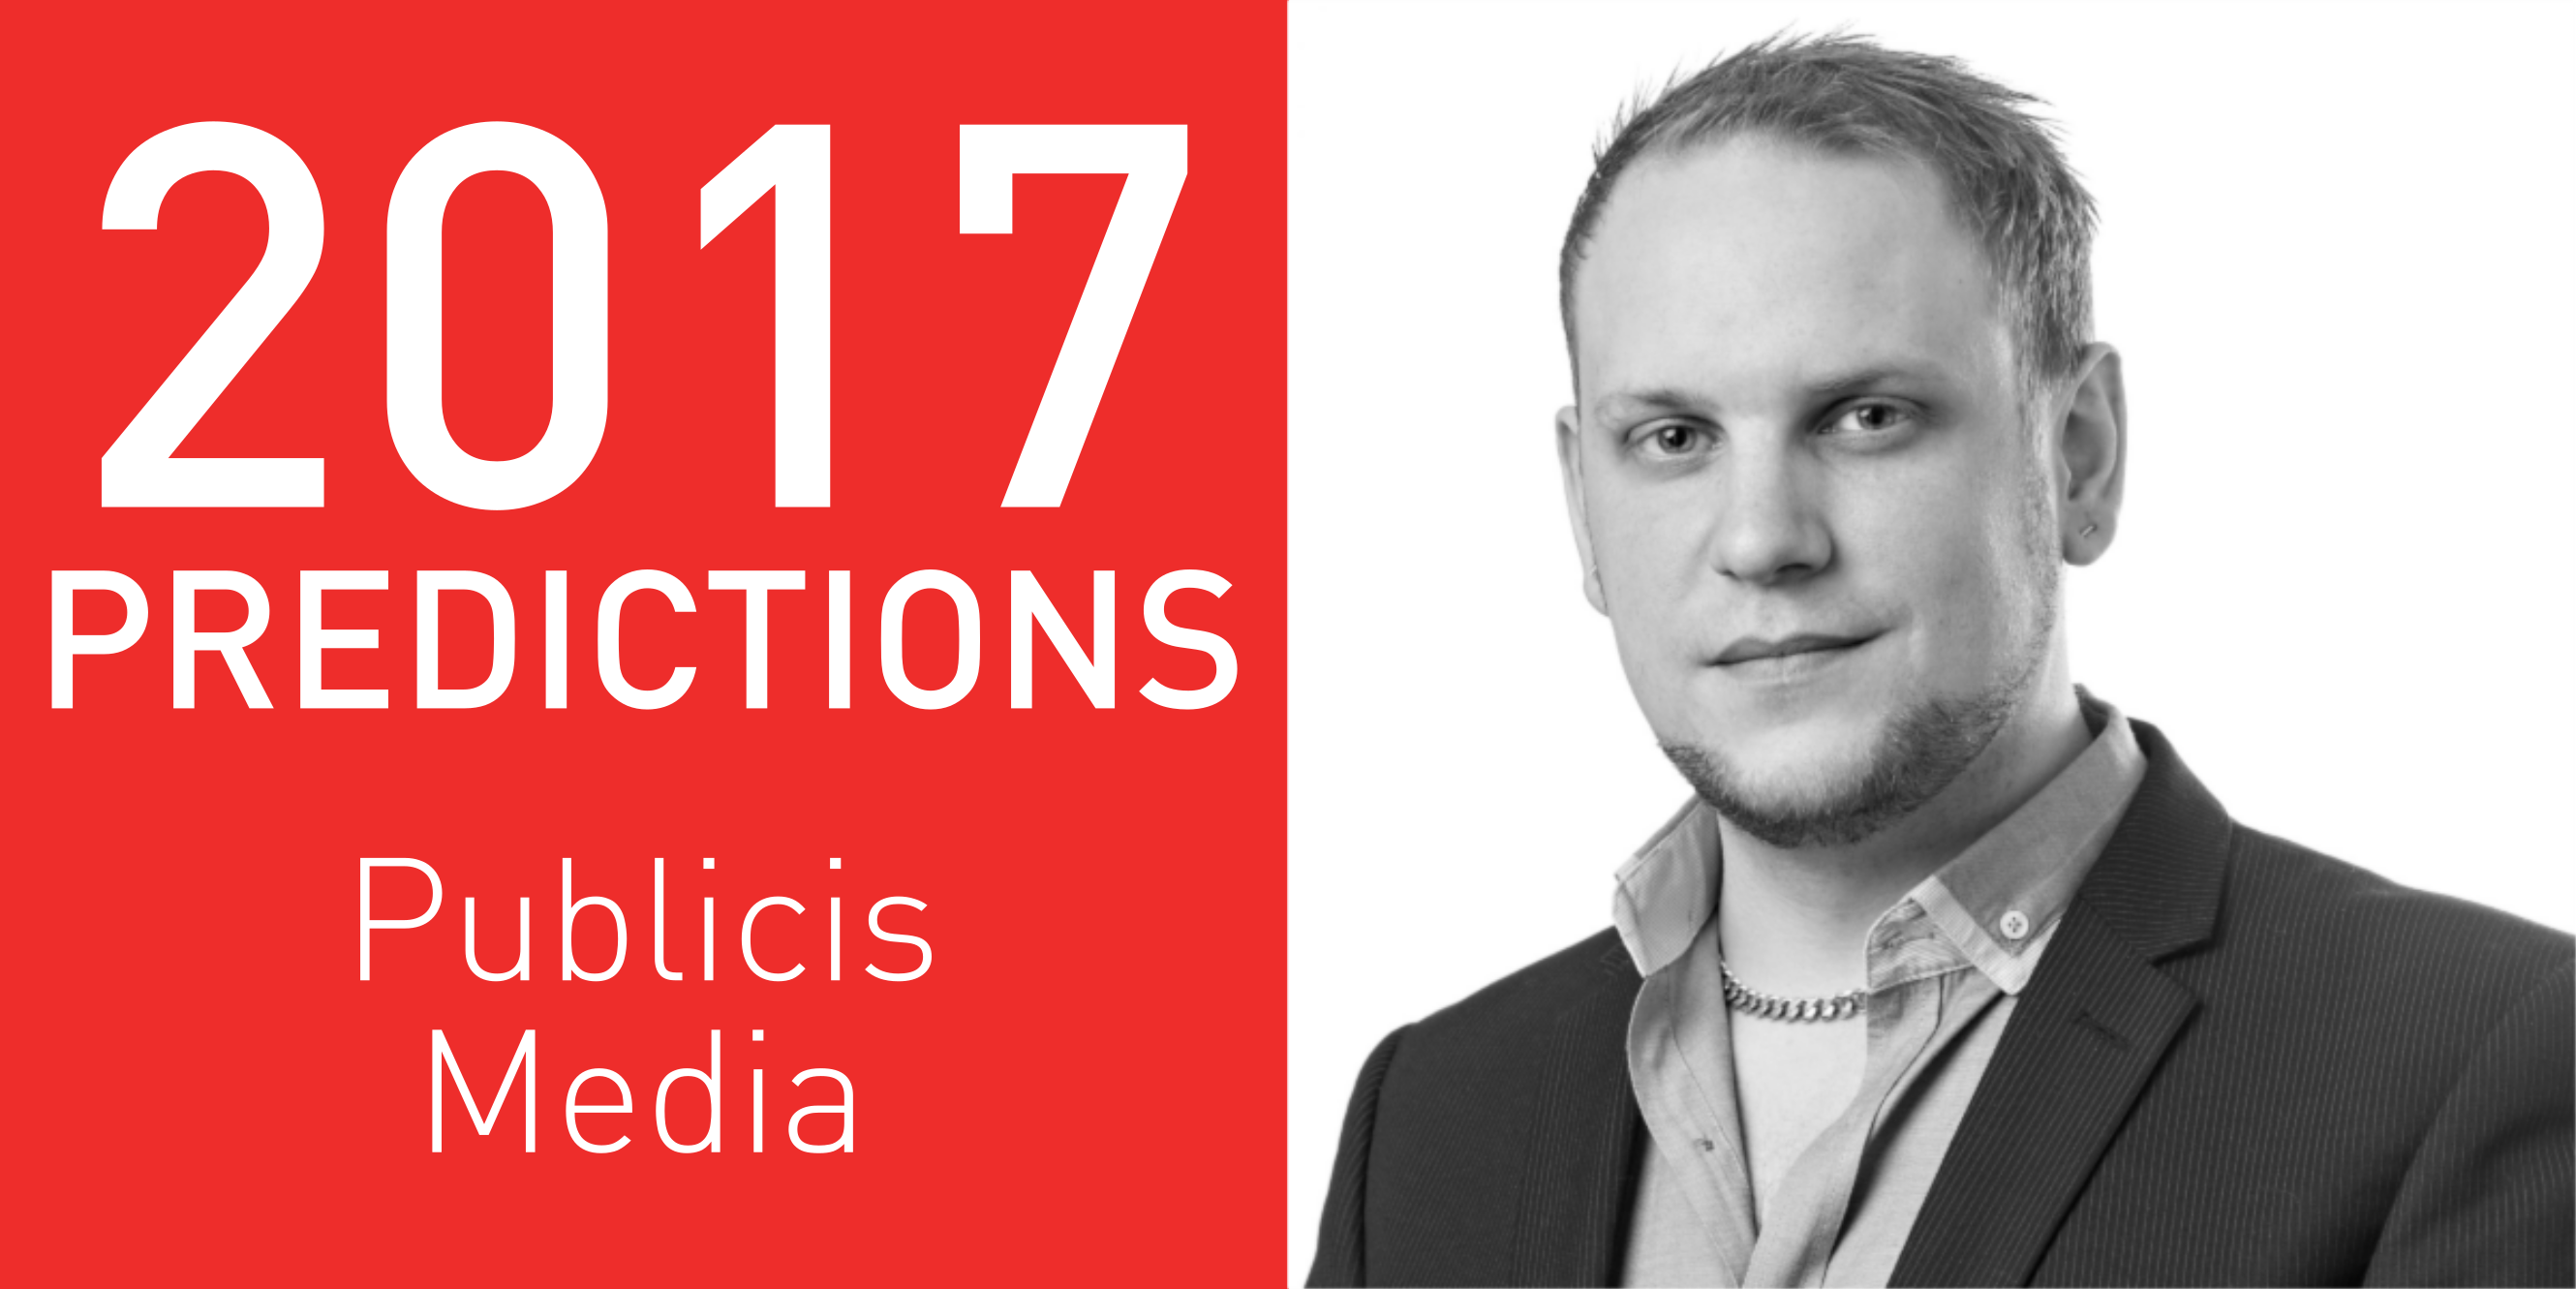 2017 predictions Publicis Media